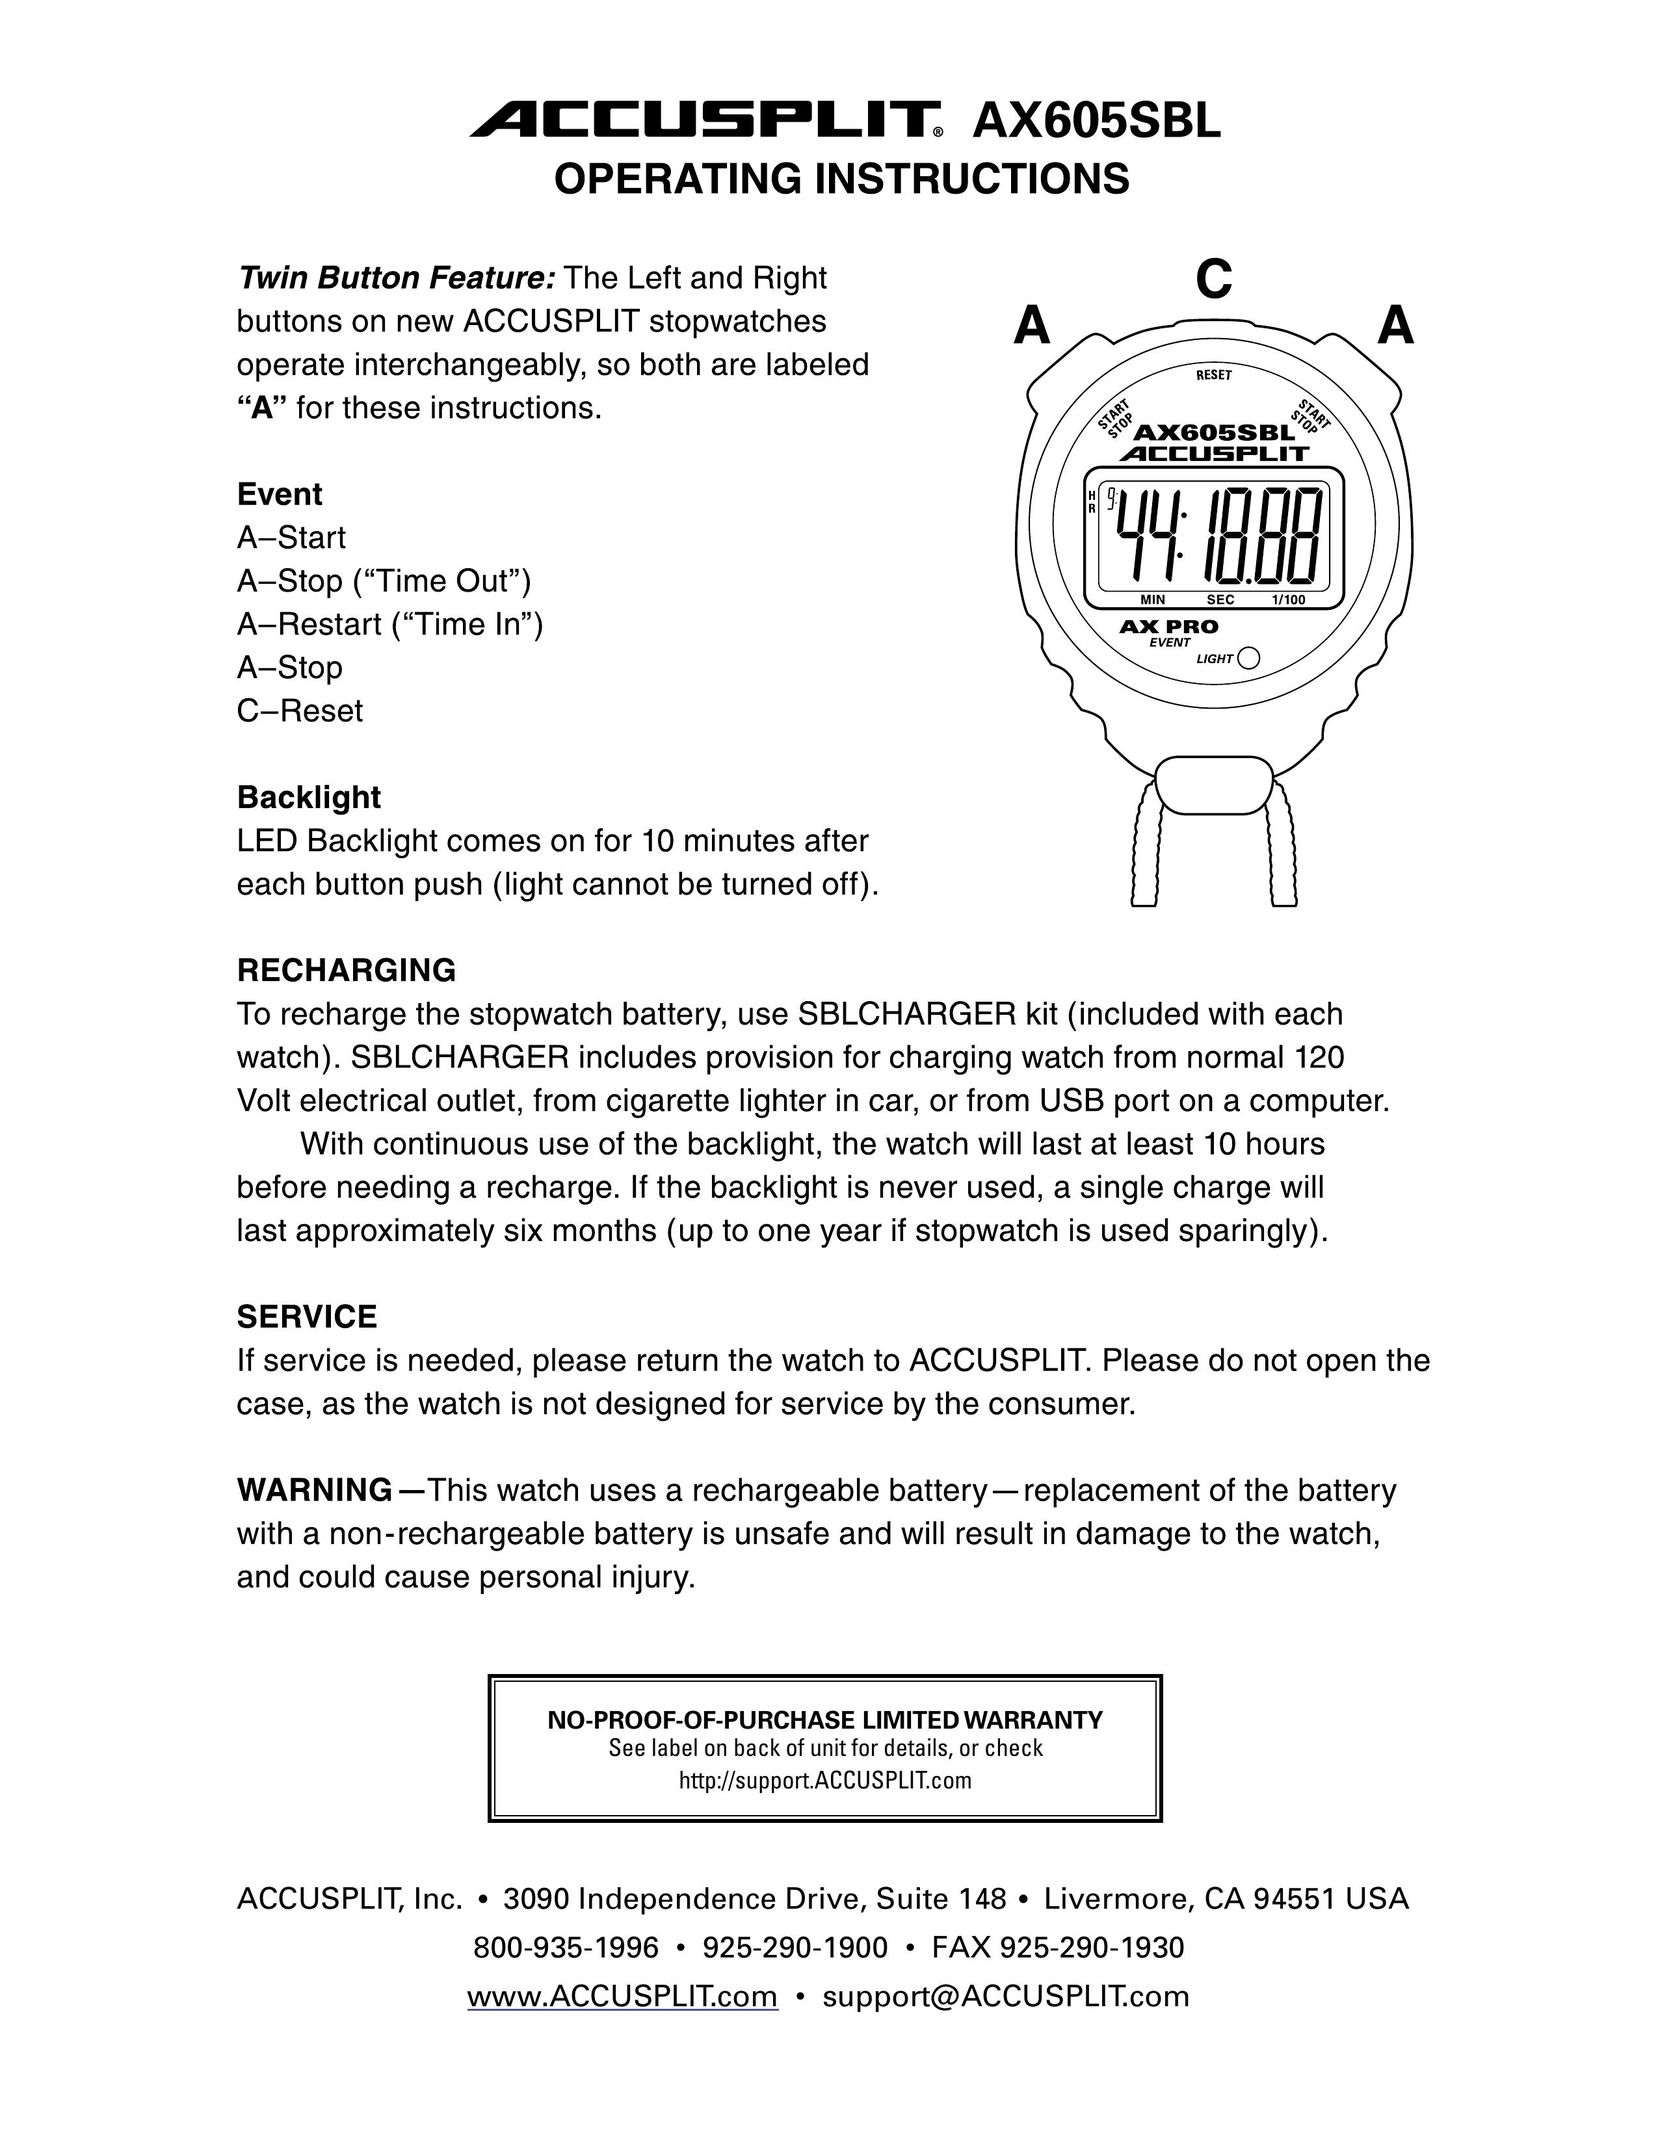 Accusplit AX605SBL Heart Rate Monitor User Manual